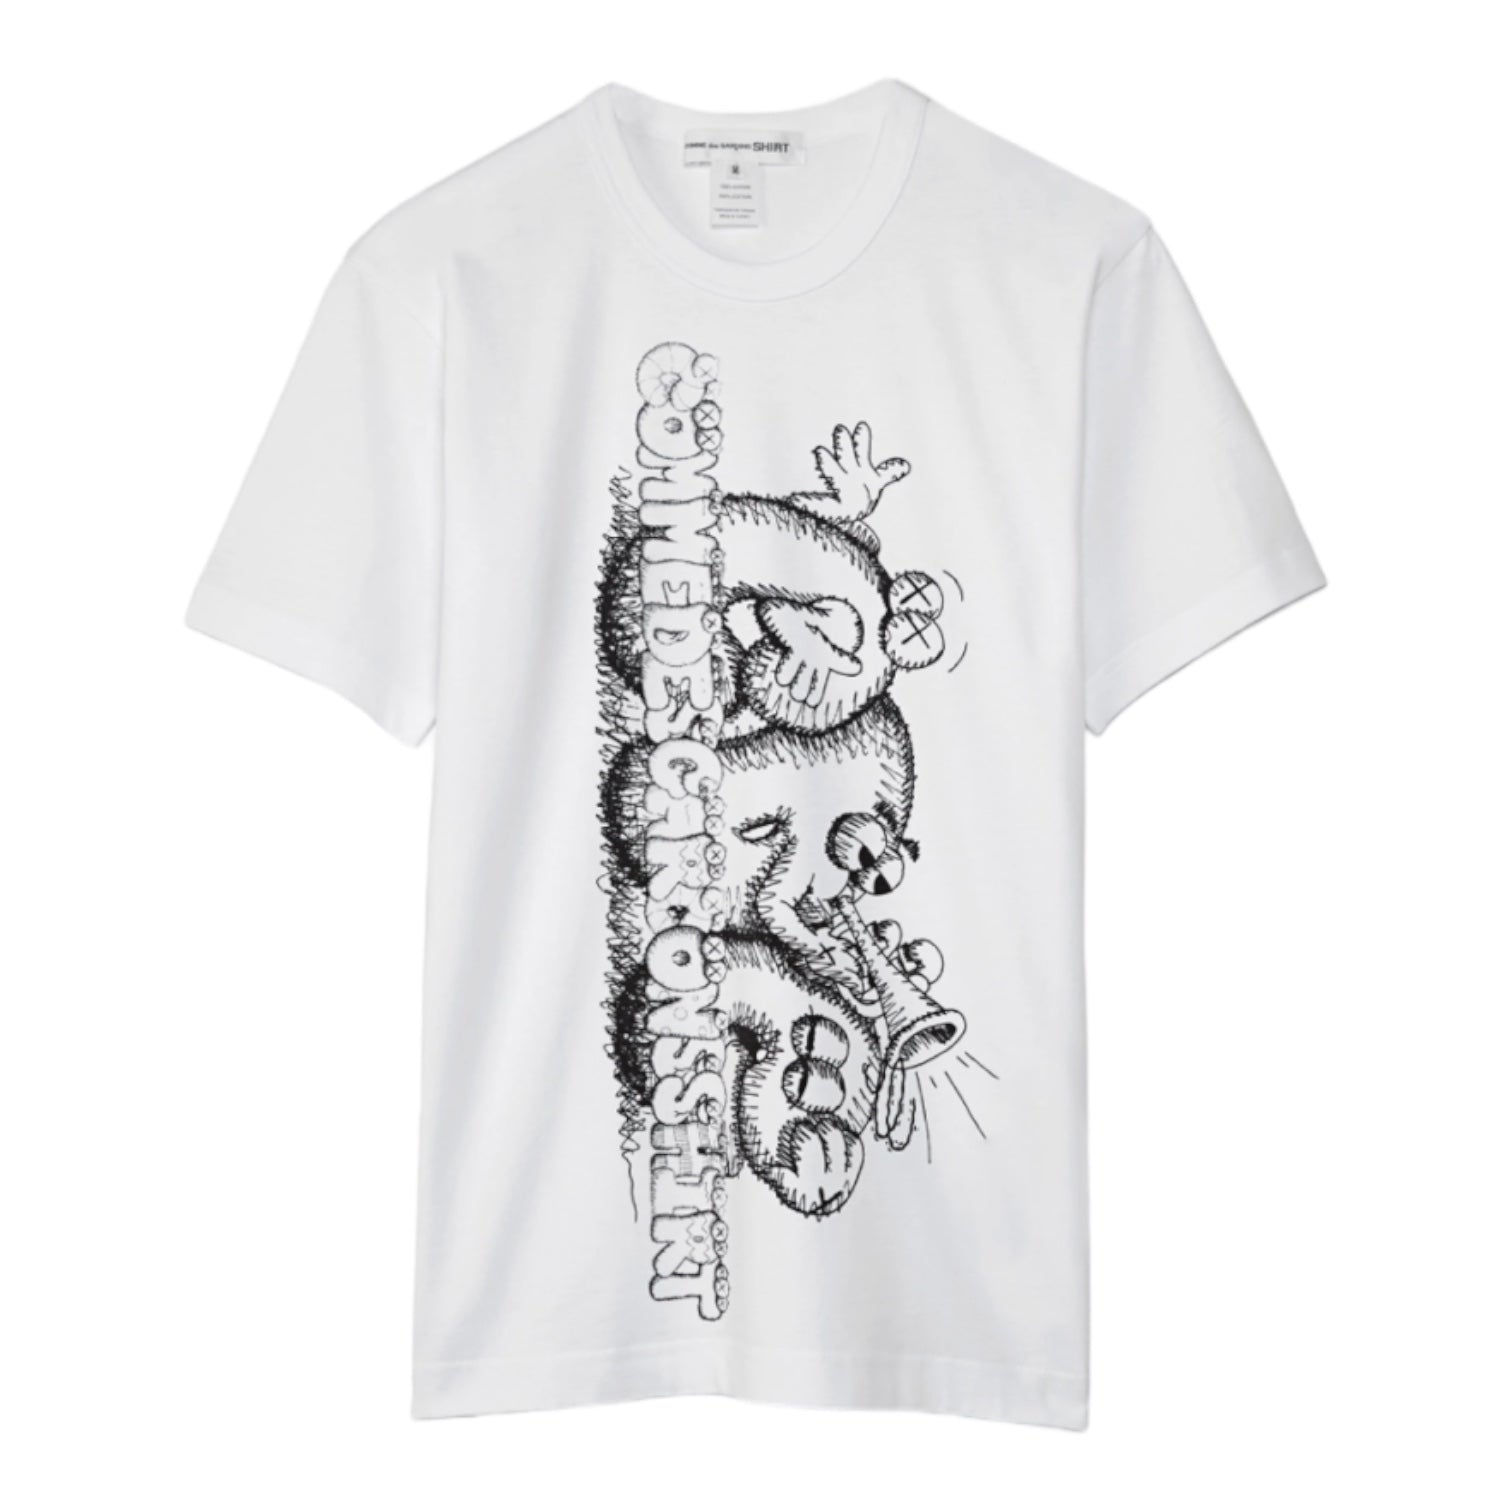 Comme Des Garcon Shirt x Kaws Shirt - Black/White Graphic Shirt